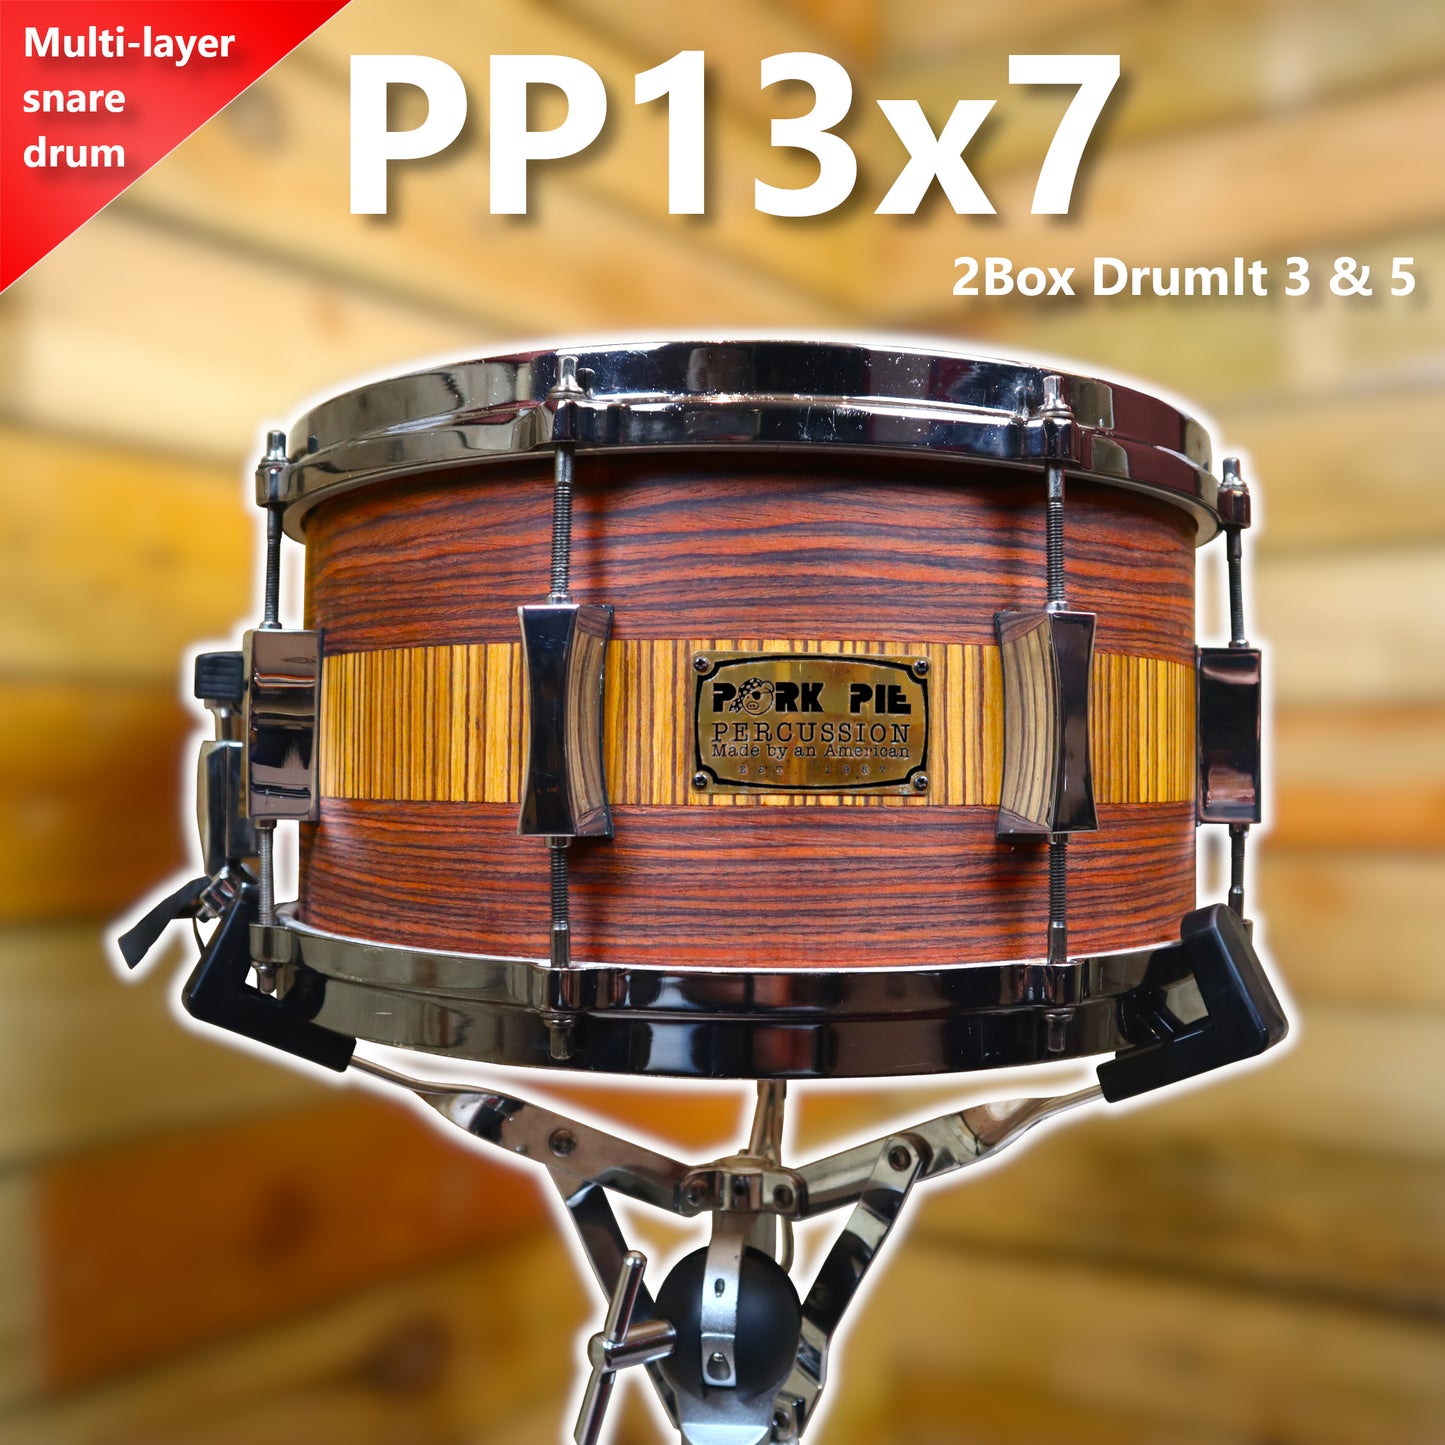 PP13x7 Snare | 2Box DrumIt 3 & 5